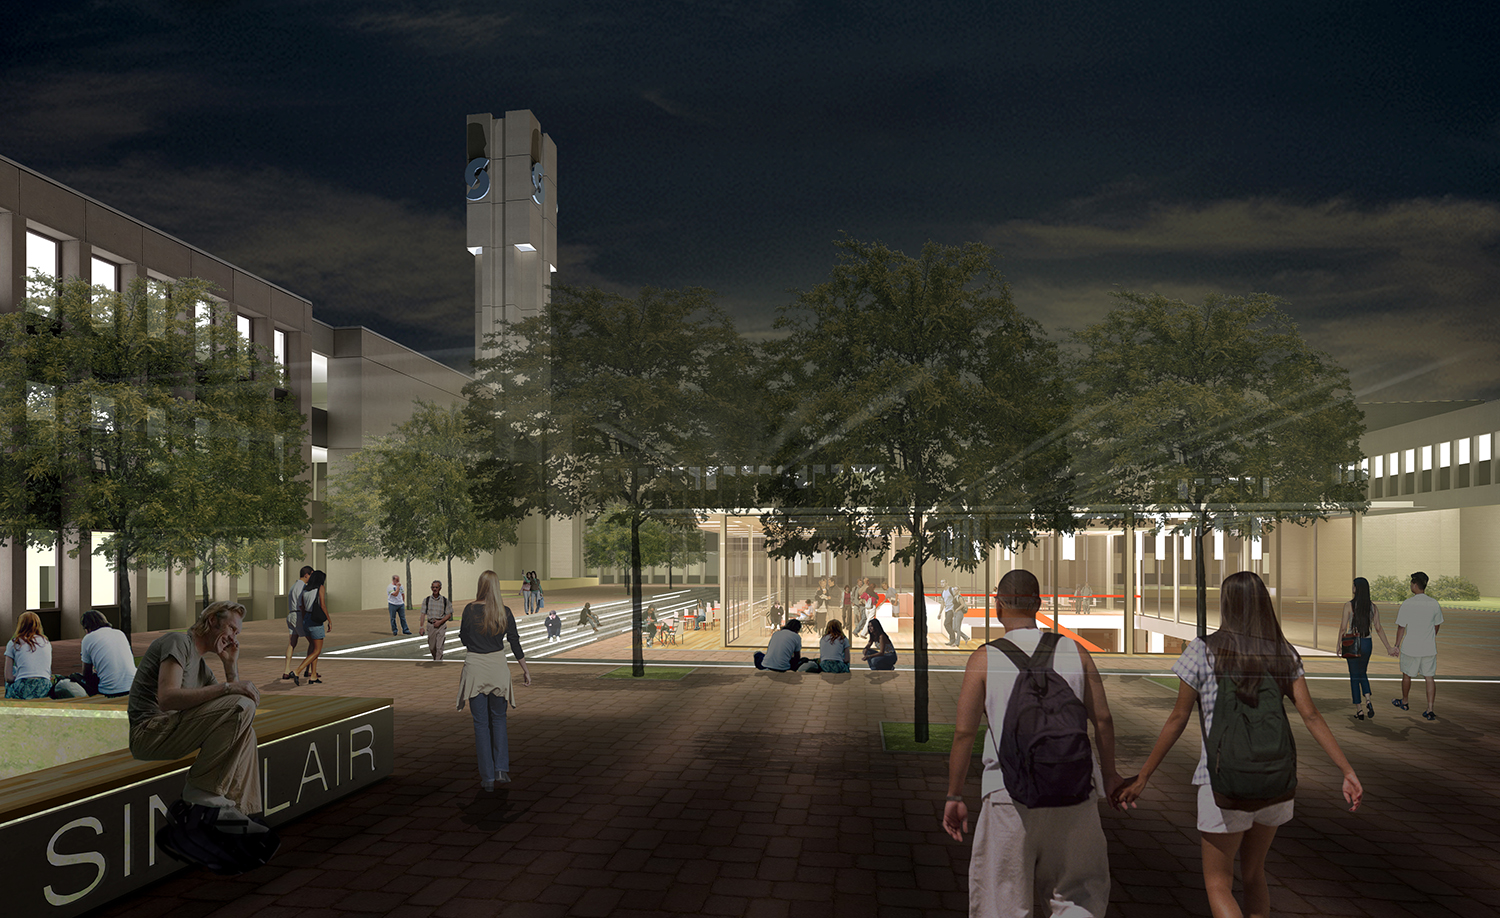 rendering of campus at night